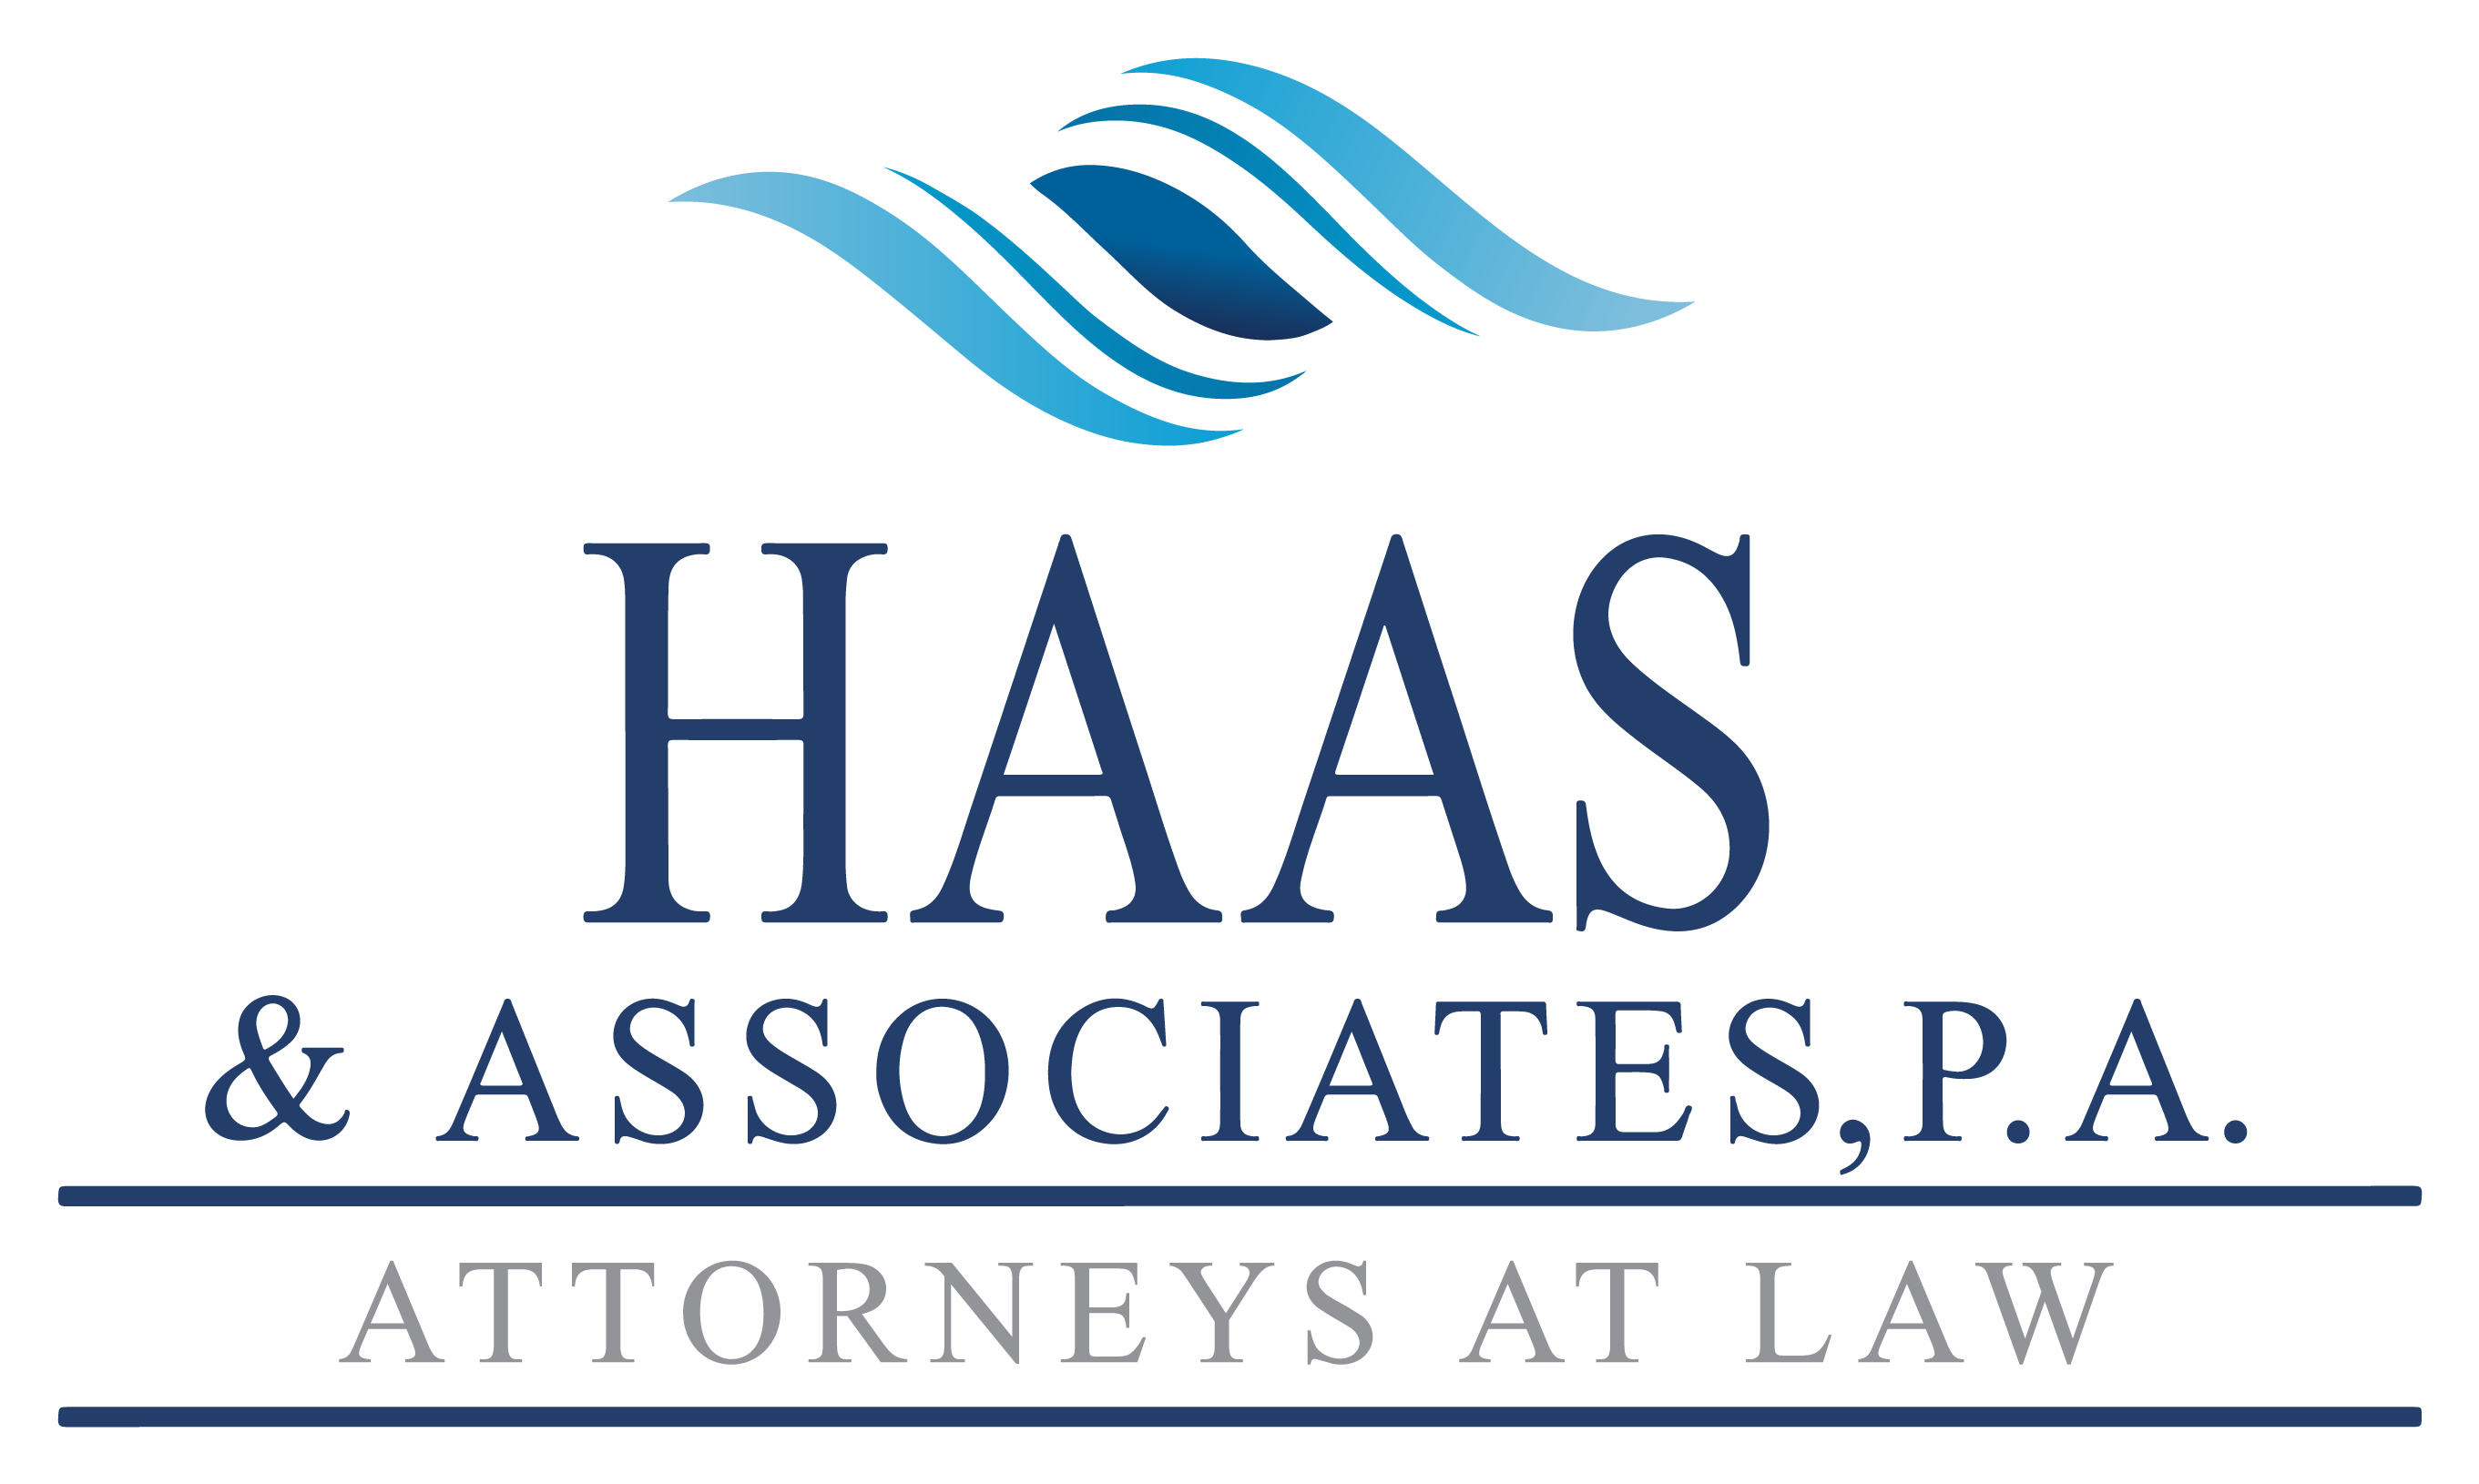 Haas & Associates, P.A.